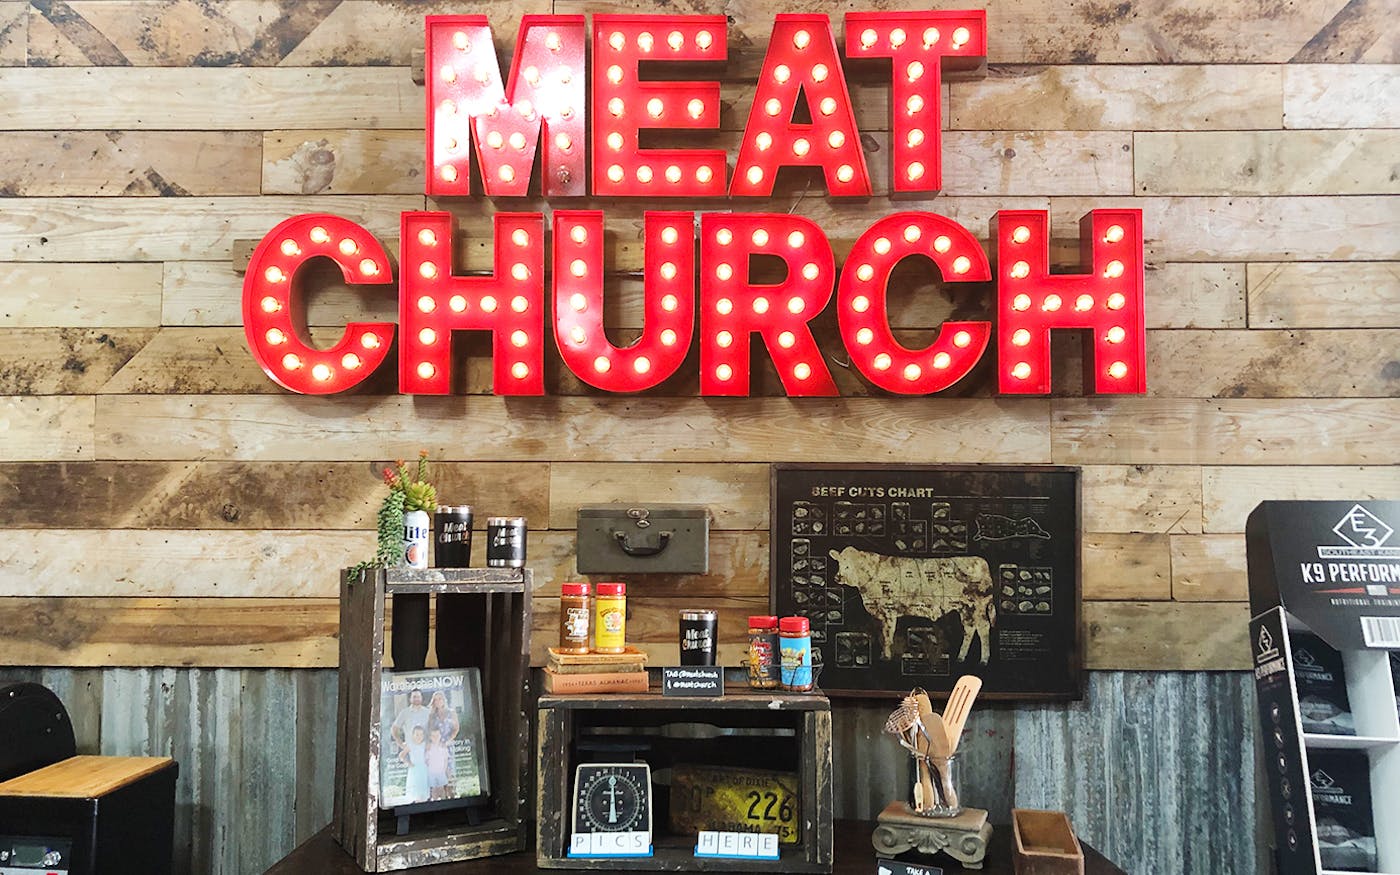 https://img.texasmonthly.com/2019/08/Meat-Church-BBQ.jpg?auto=compress&crop=faces&fit=crop&fm=jpg&h=1400&ixlib=php-3.3.1&q=45&w=1400